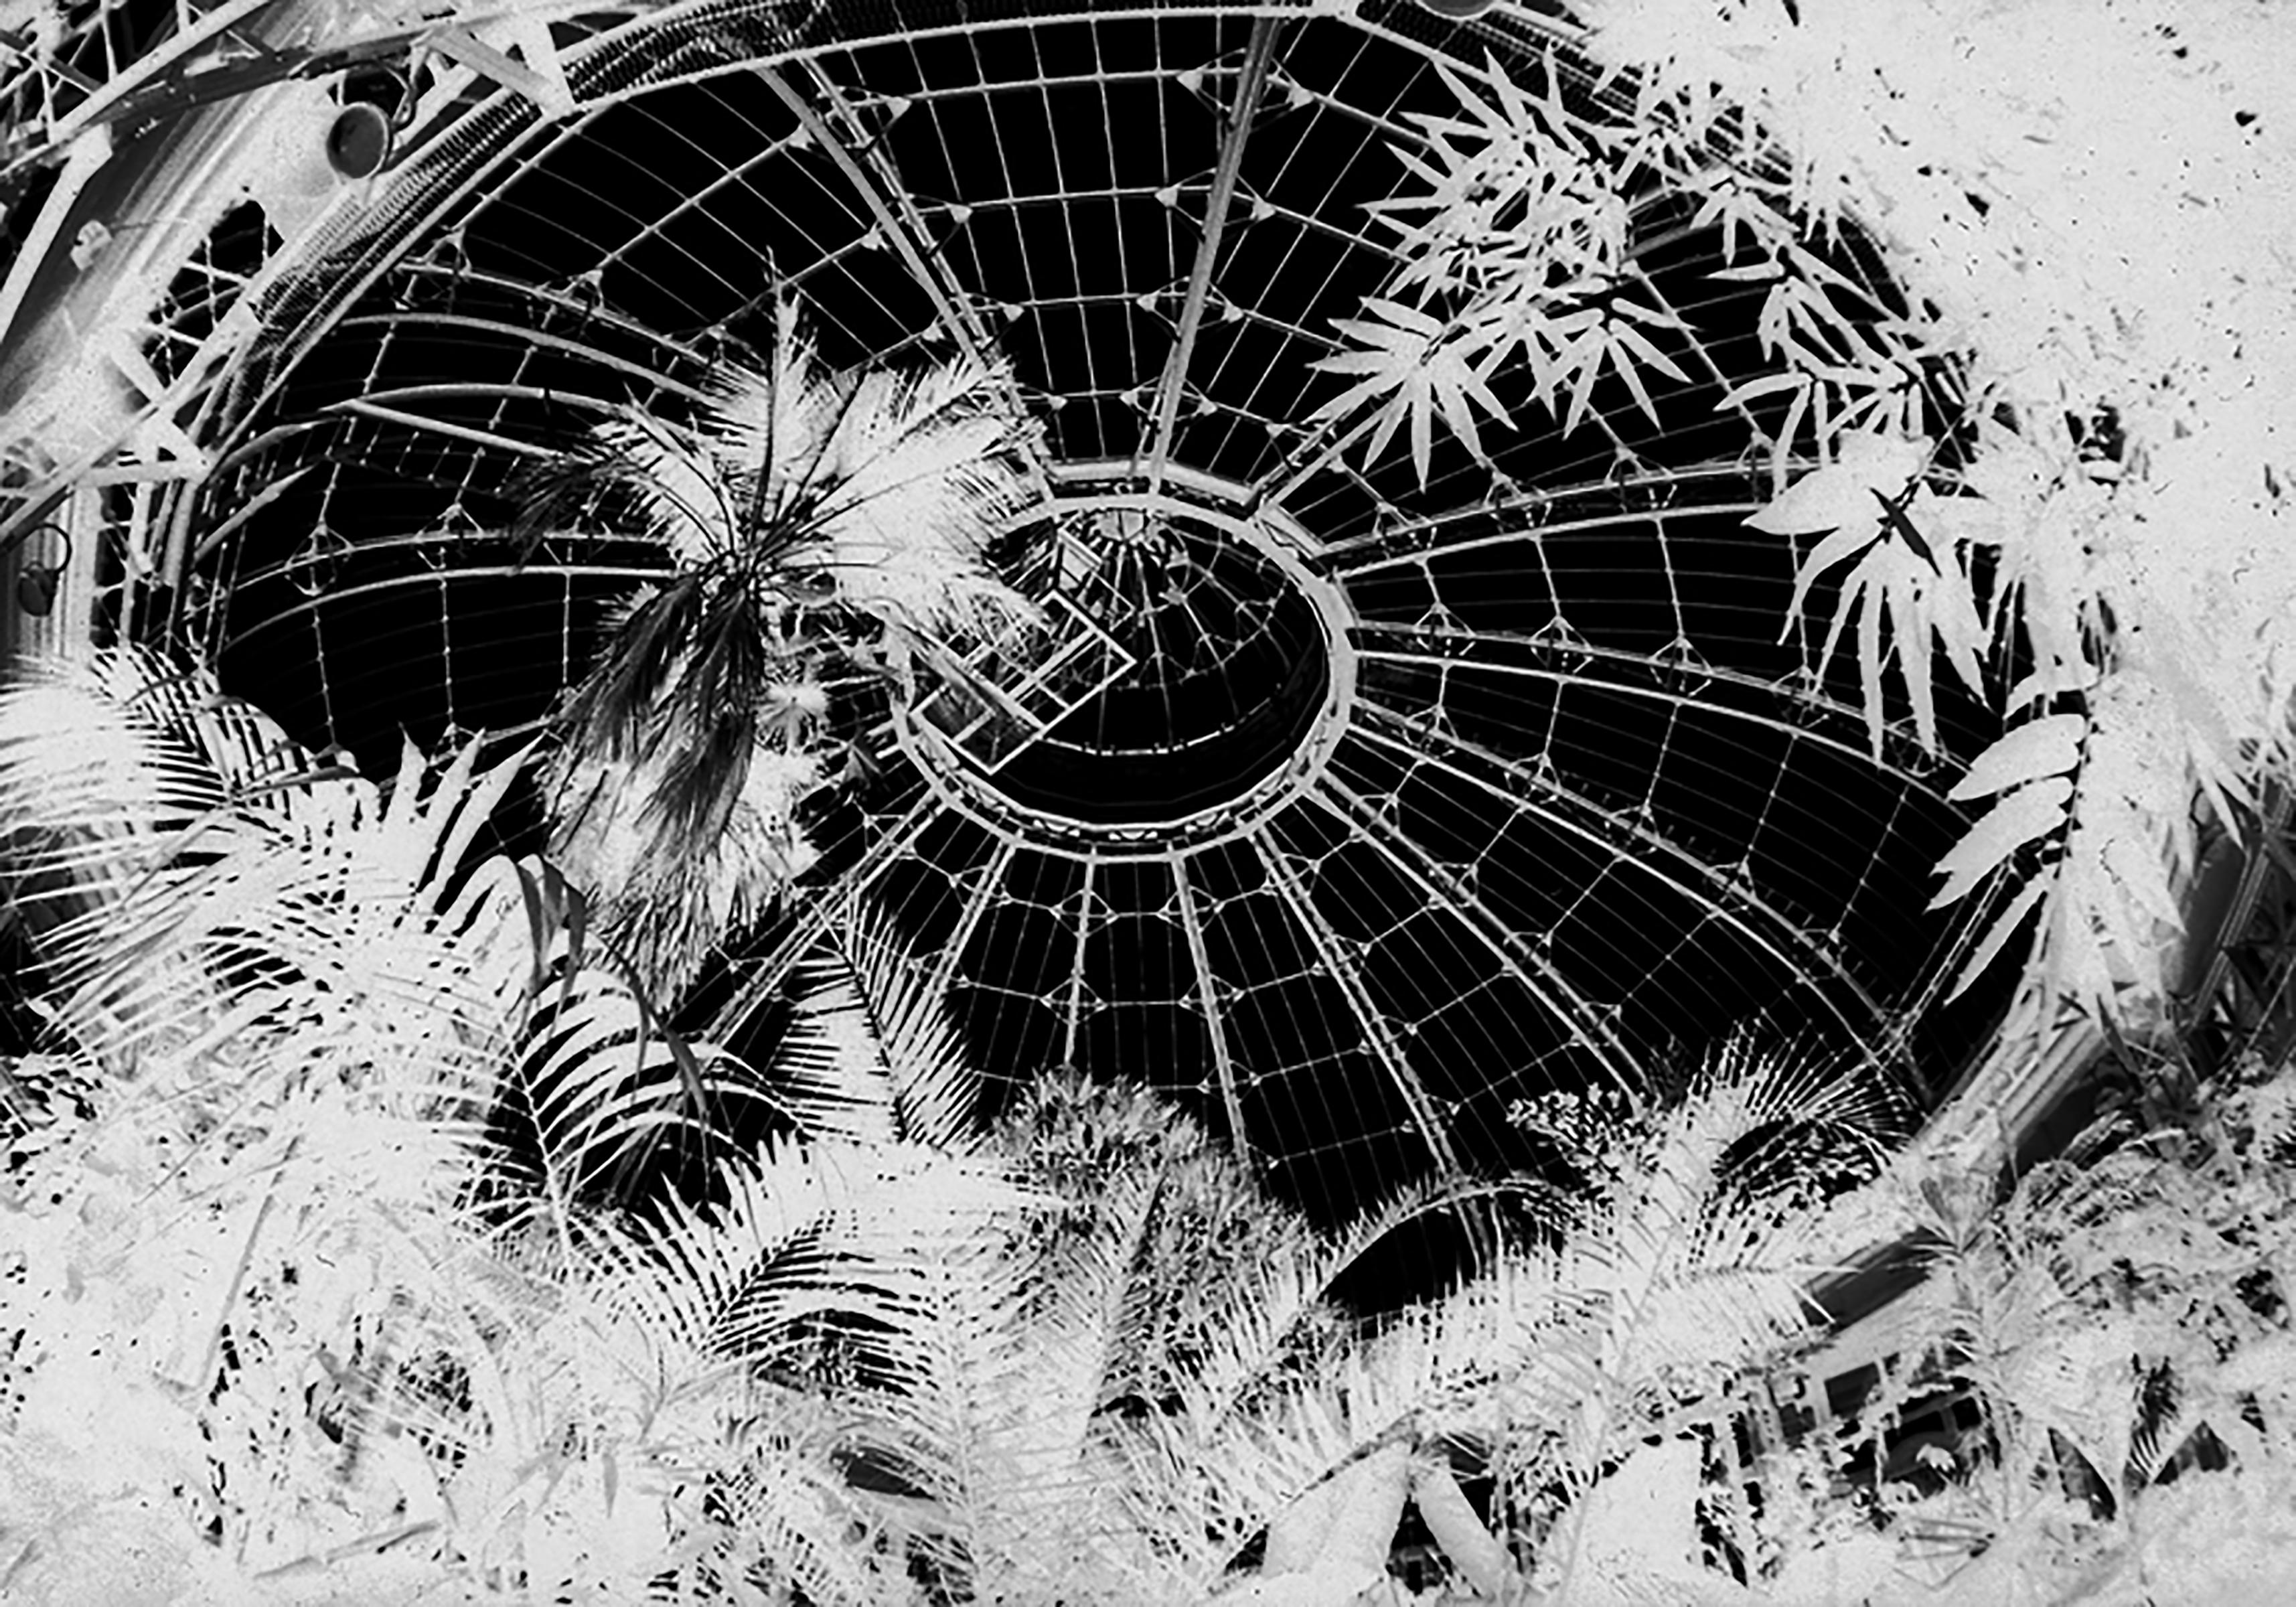 Penelope Stewart Landscape Photograph - Terminus IV, black and white photo on glass